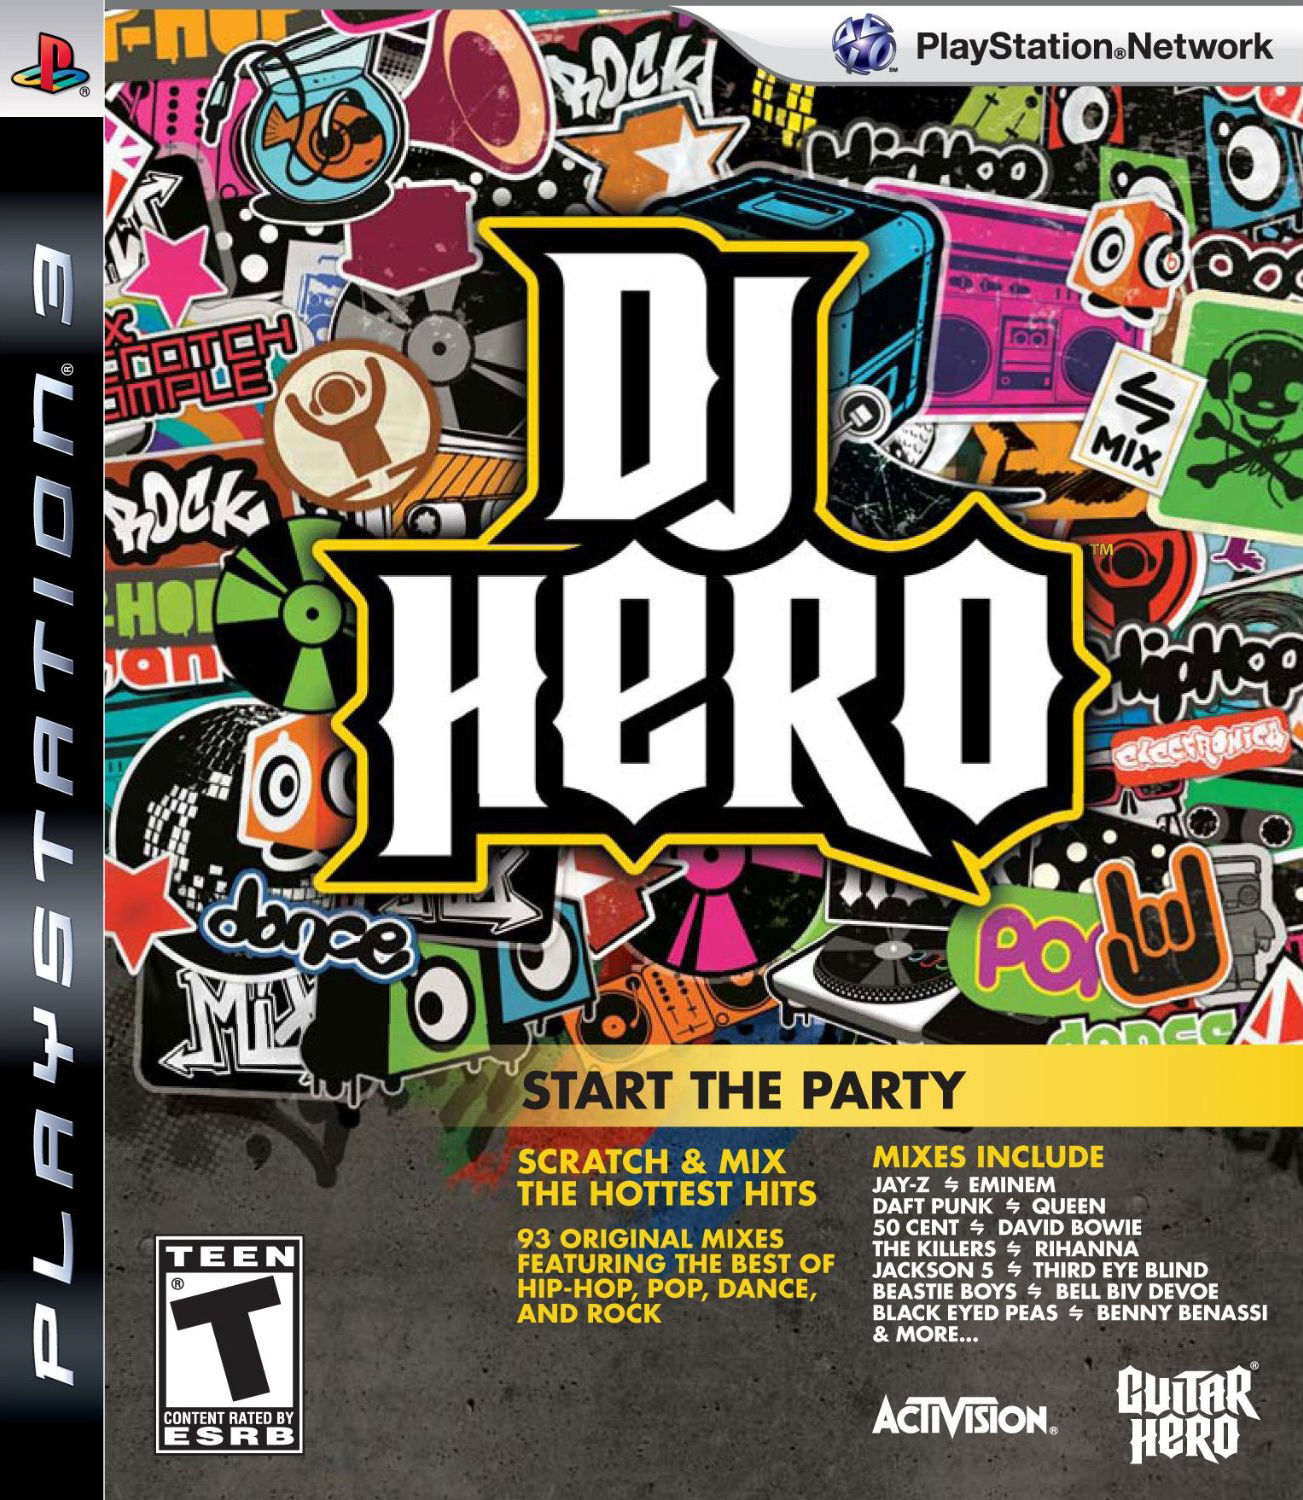 DJ Hero (sw), Activision Blizzard, PlayStation 3, 047875961920 - image 1 of 11